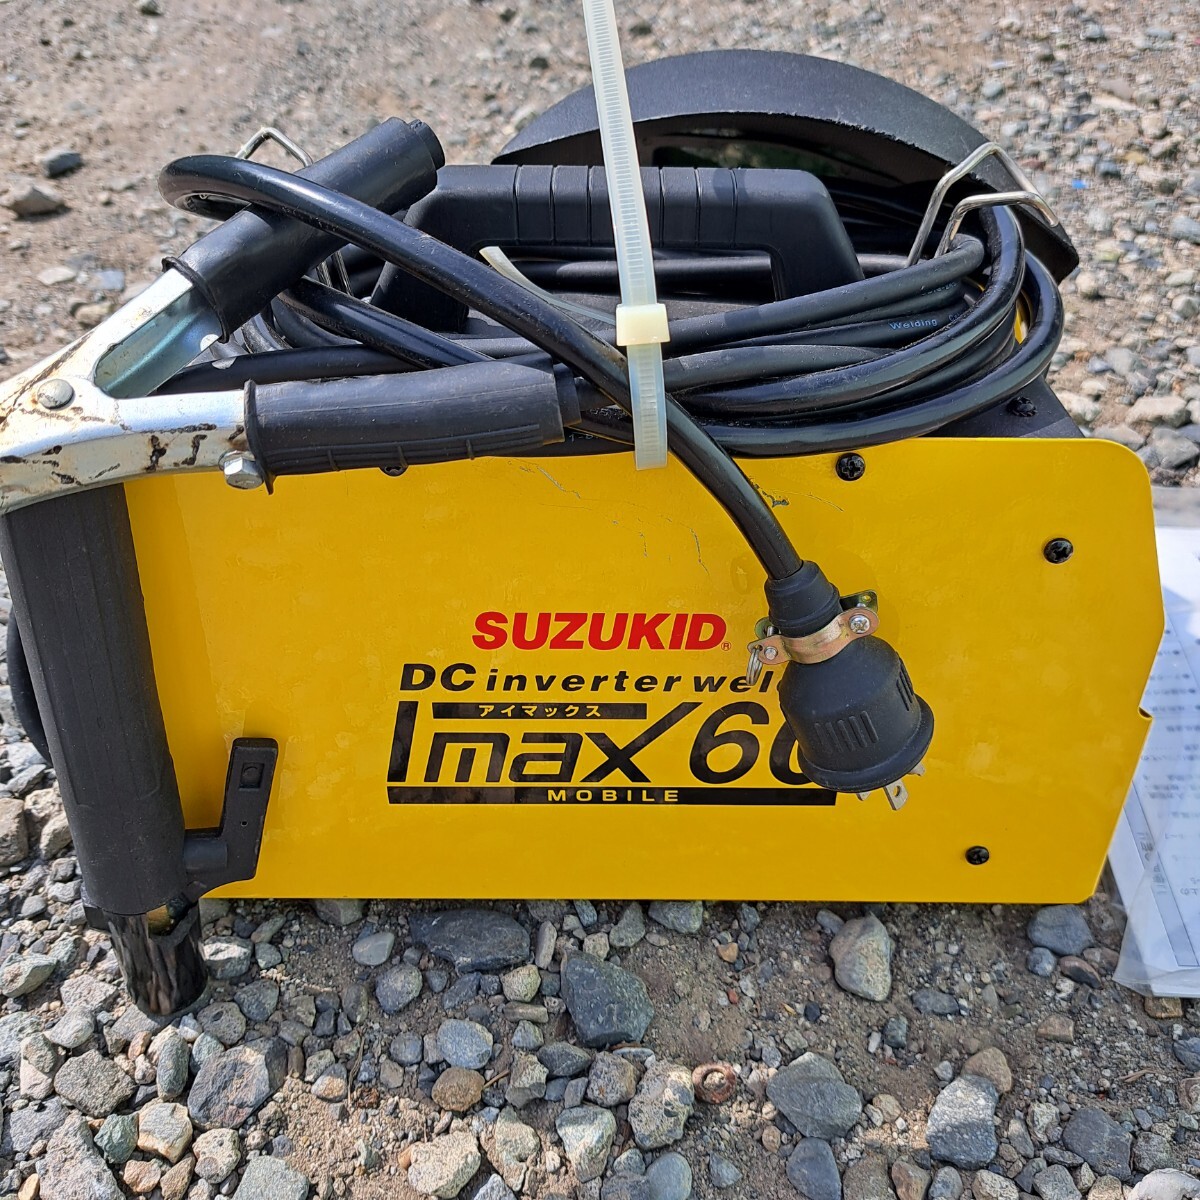 SUZUKID スズキッド アイマックス DC inverter welder Imax 60 インバータ制御 直流アーク溶接機 直接引取可の画像1